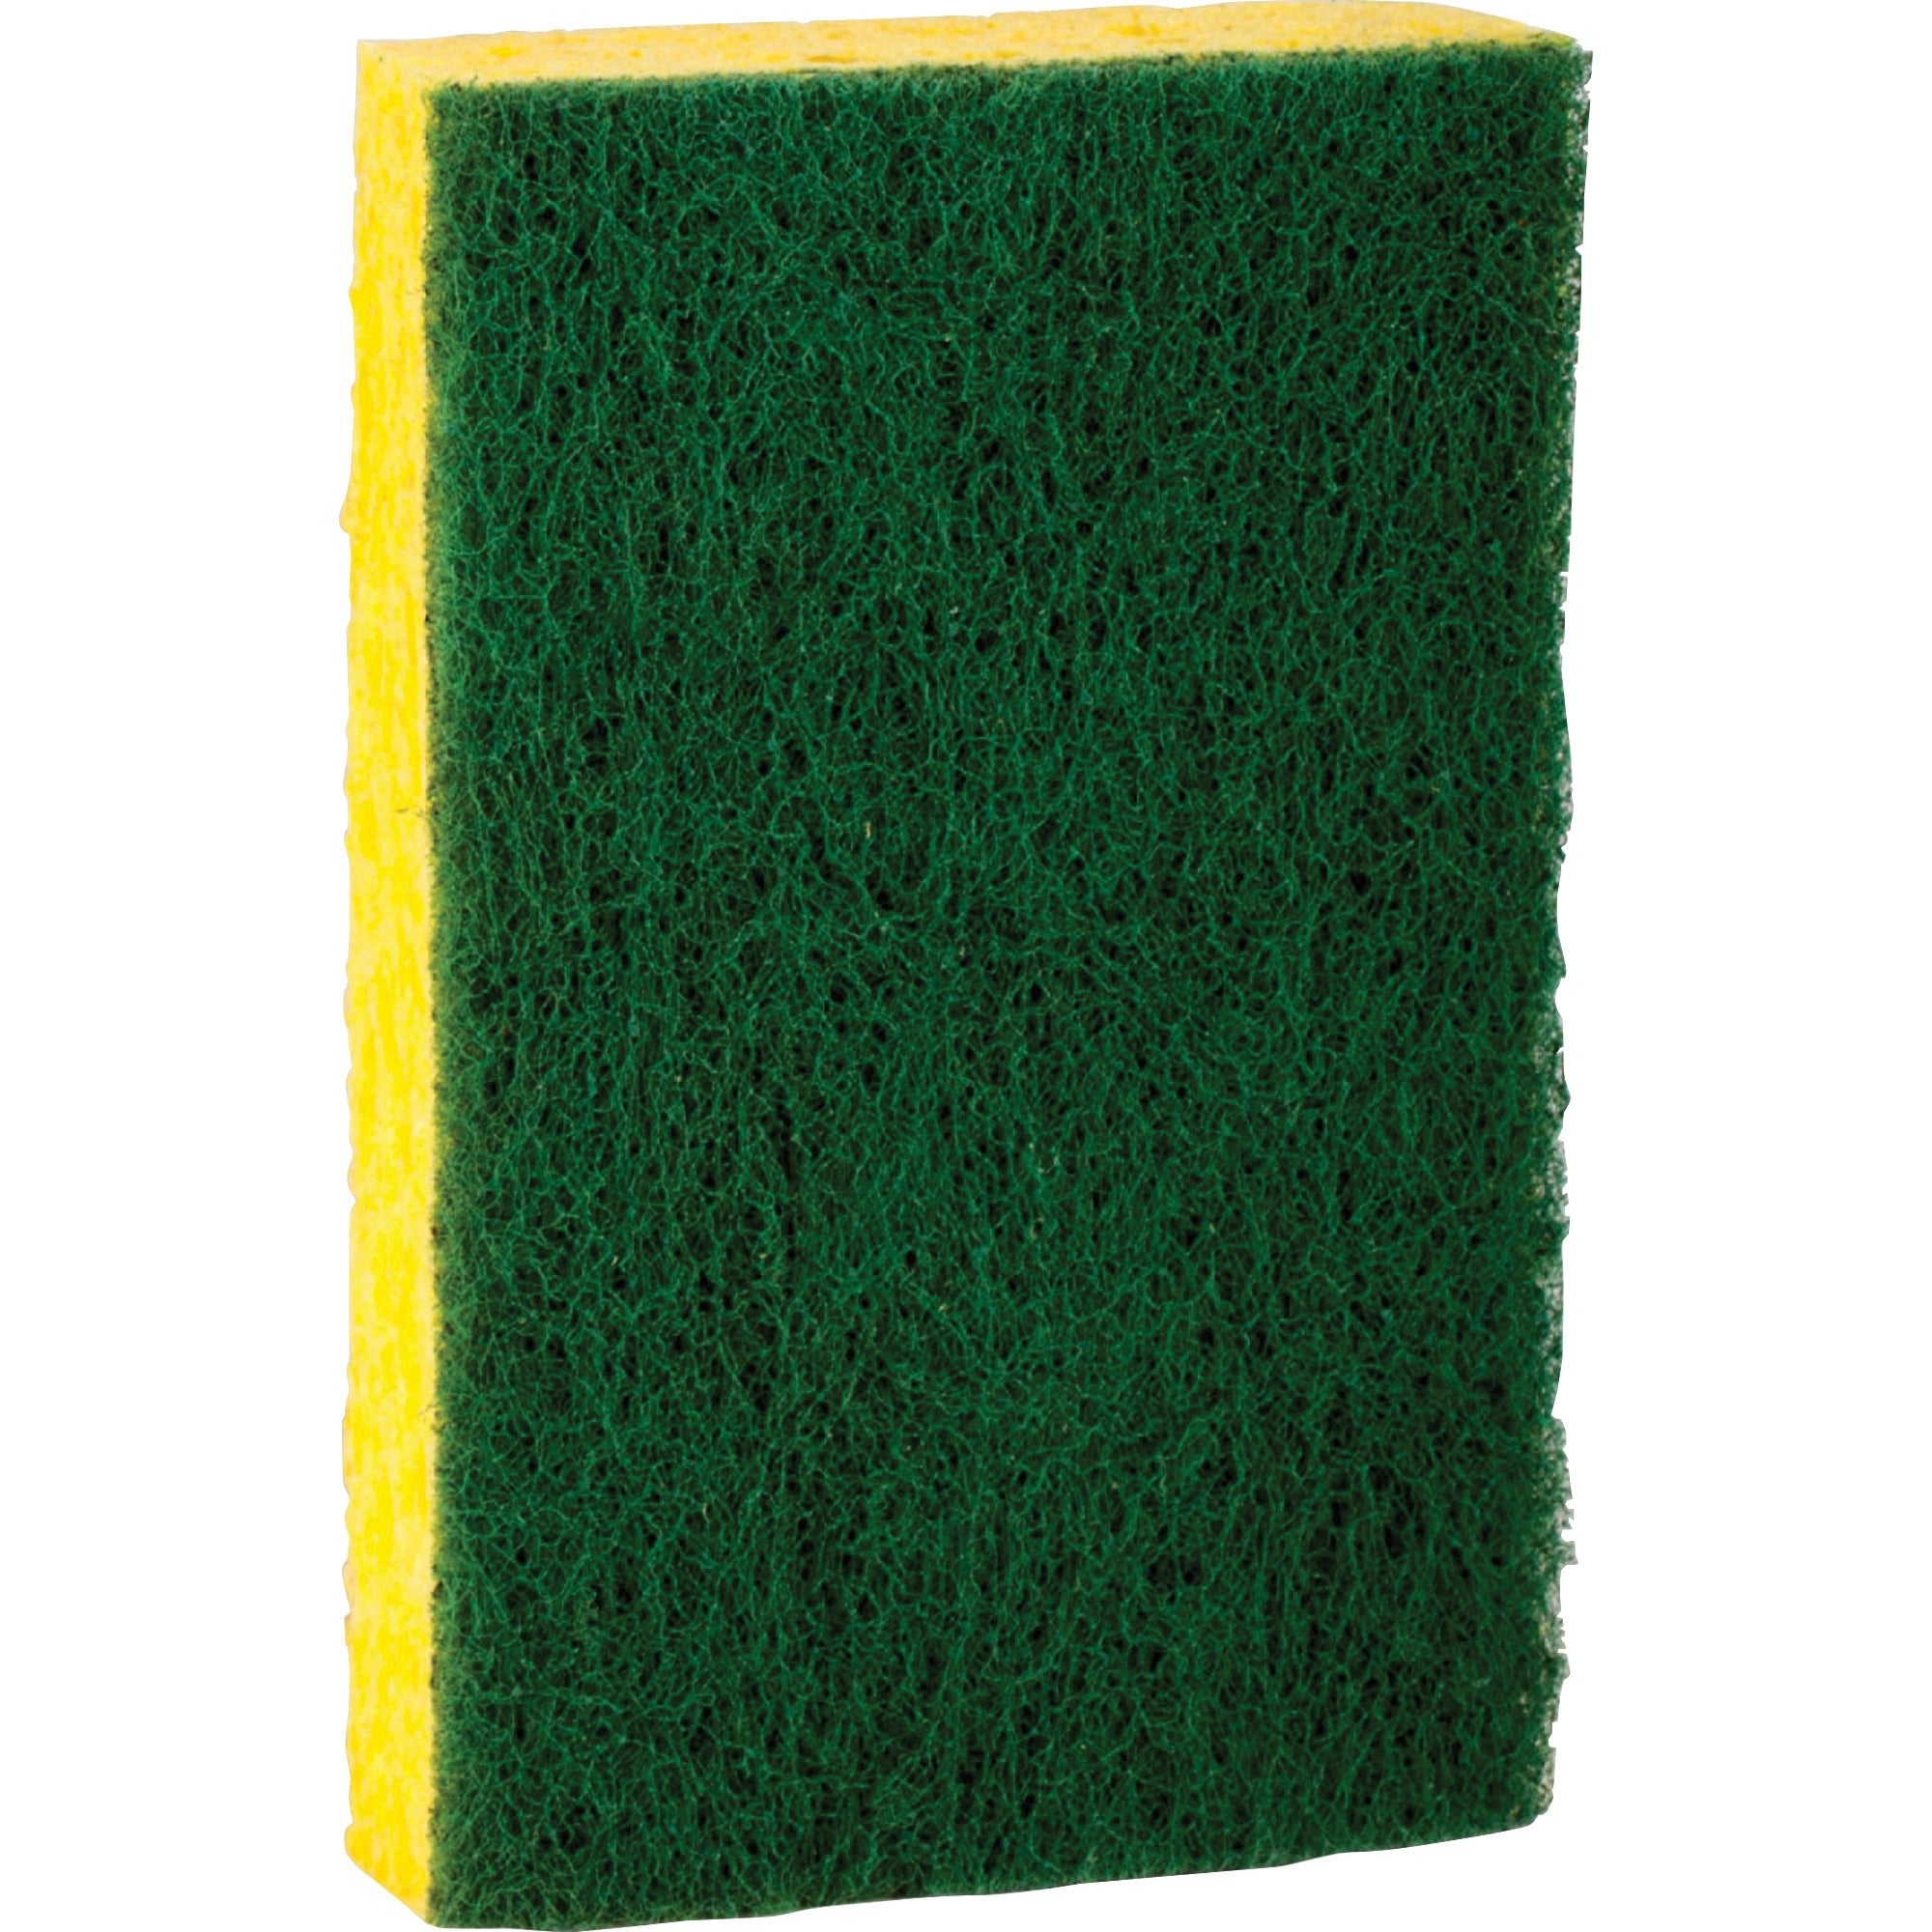 Scotch-Brite Heavy-Duty Scrub Sponges - 2.8" Height x 4.5" Width x 4.5" Length x 590 mil Thickness - 8/Carton - Yellow, Green - 2